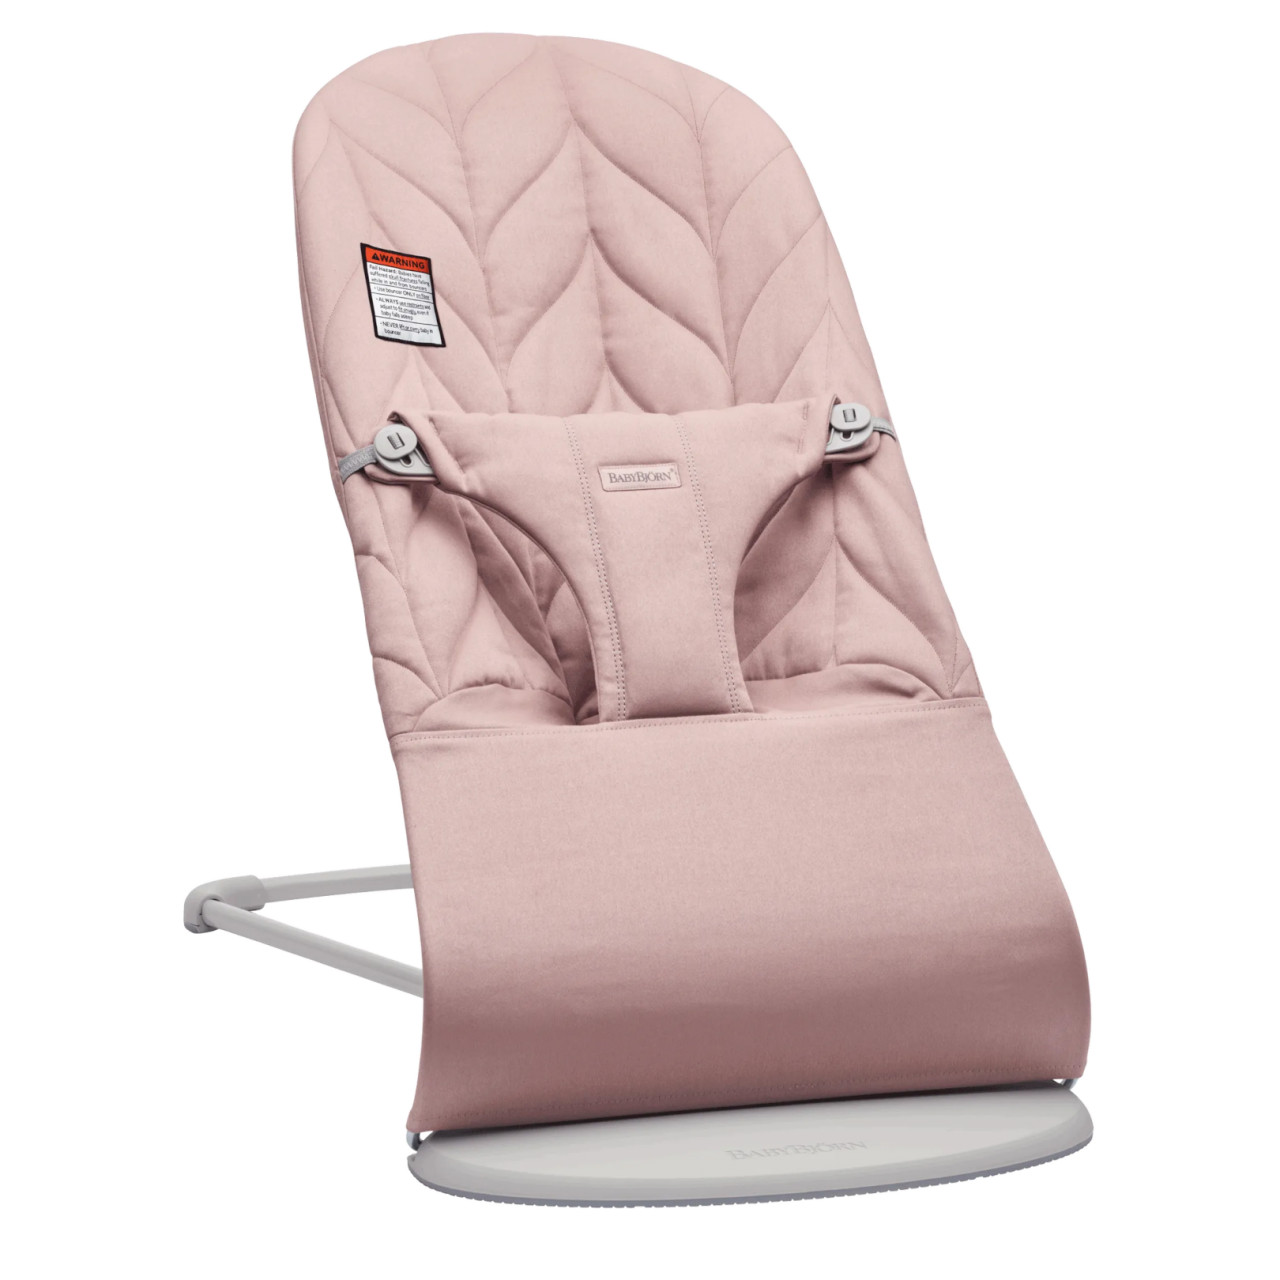 BabyBjorn - Balansoar Bliss Dusty Pink cu aspect delicat de petala, tesatura matlasata